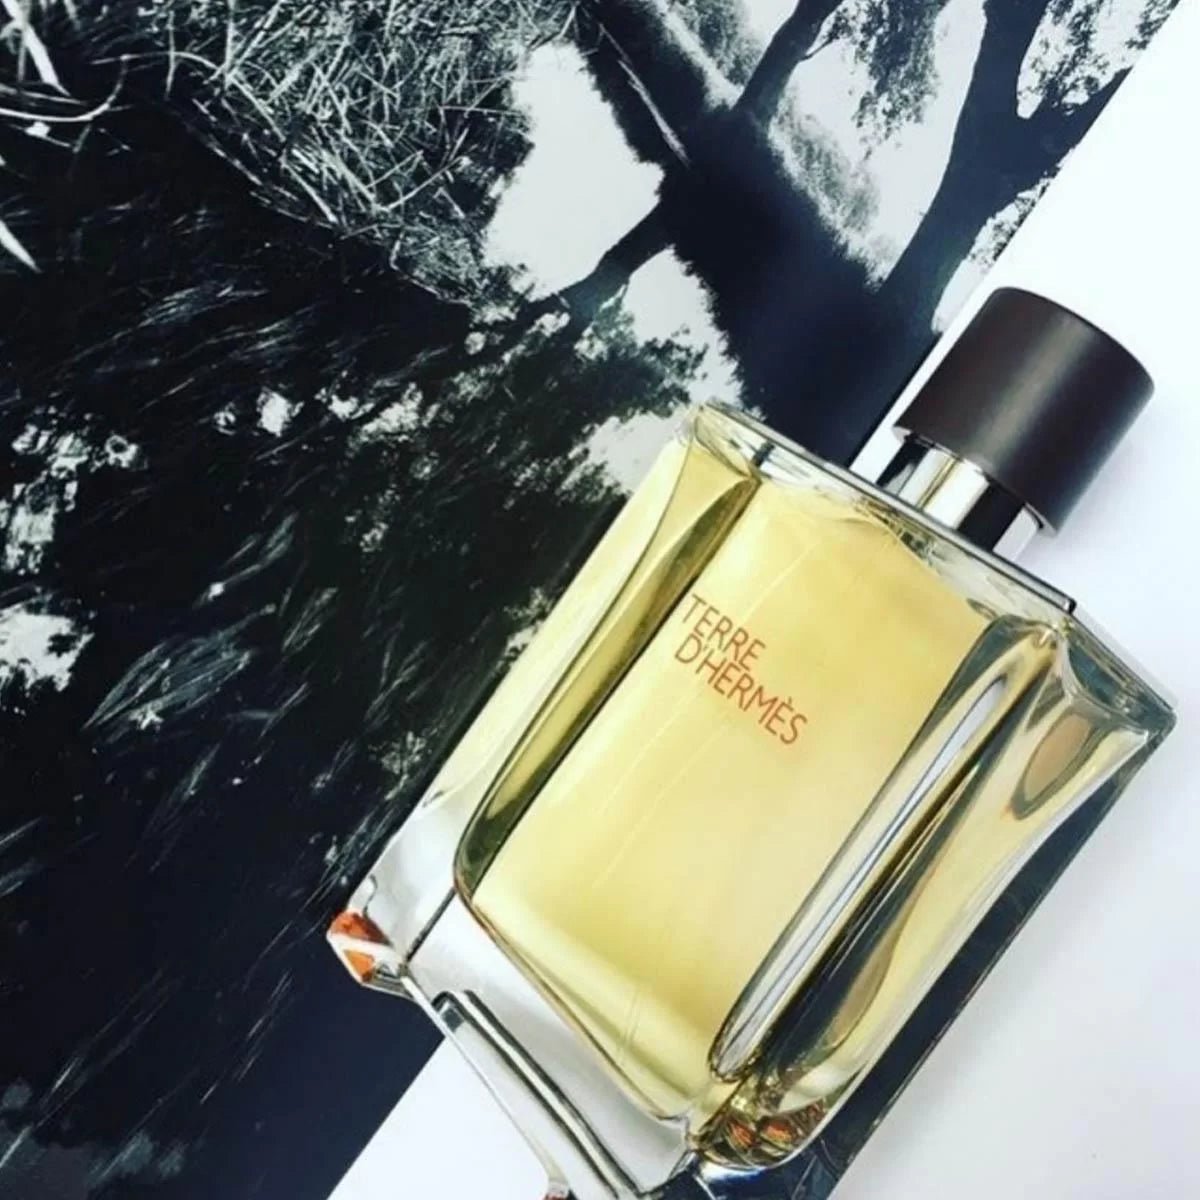 Hermes Terre D'Hermes Delux Replica EDT | My Perfume Shop Australia